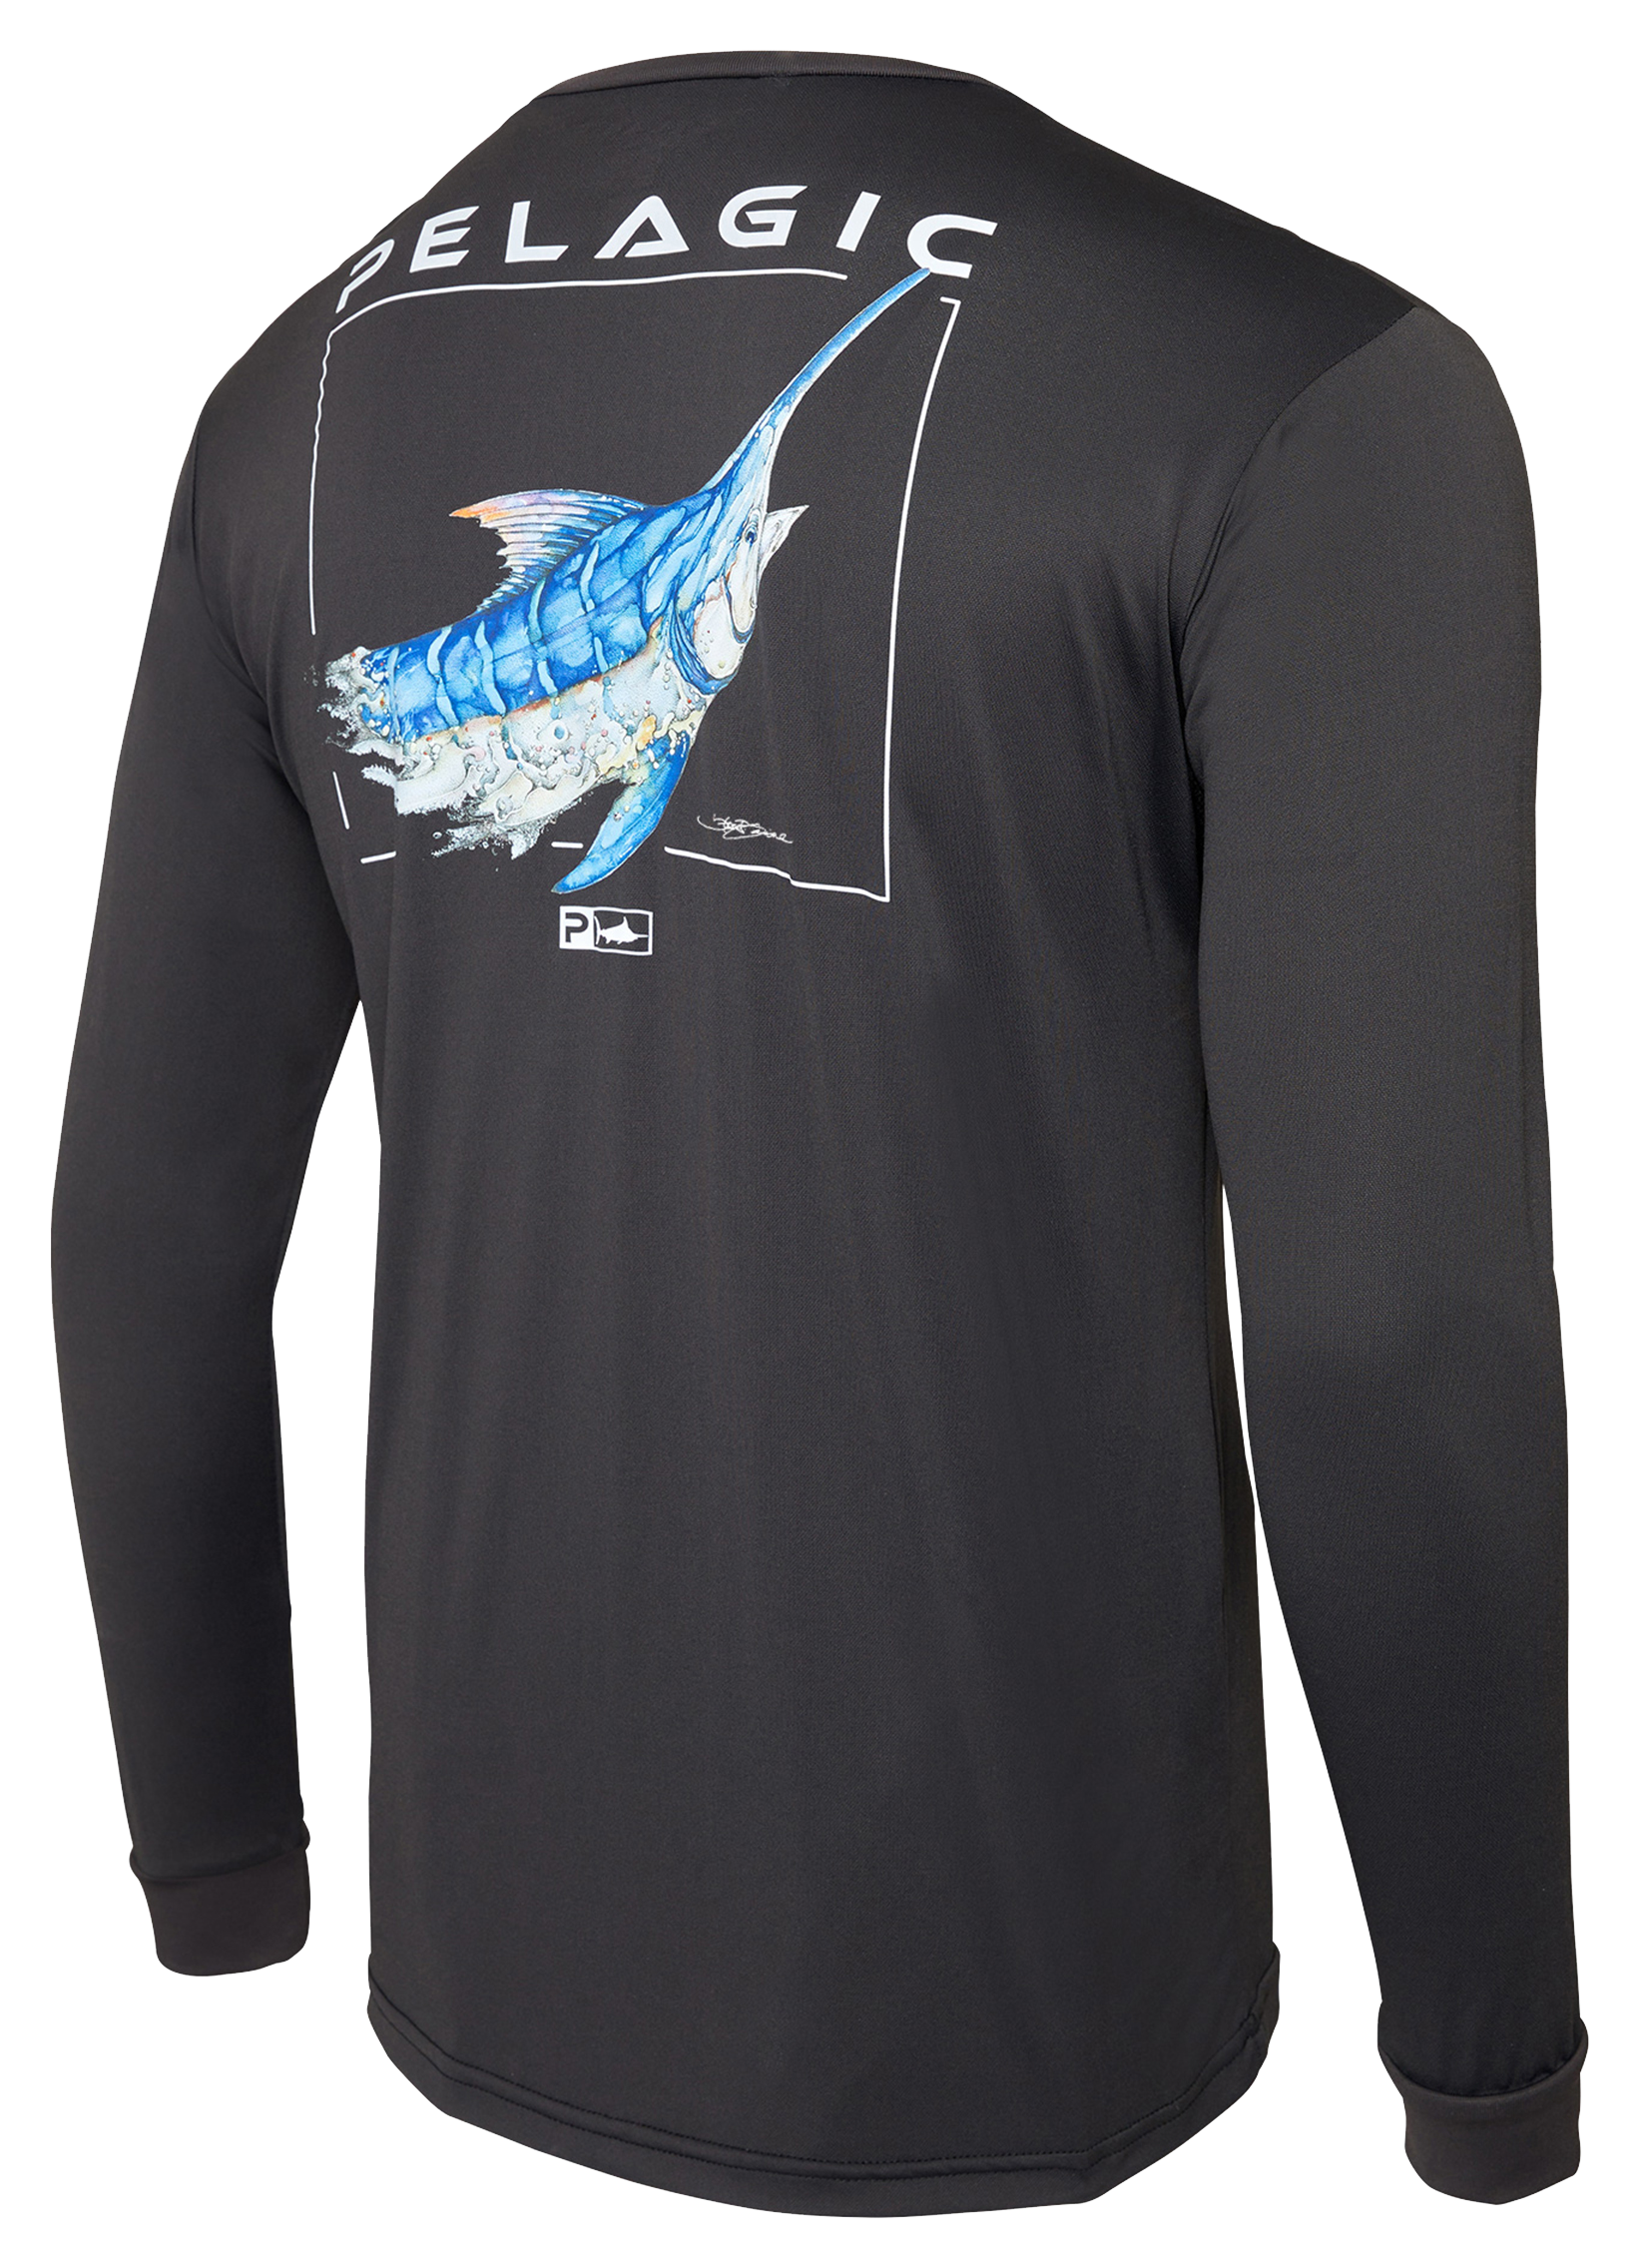 Pelagic Aquatek Goione Marlin Long-Sleeve Shirt for Men